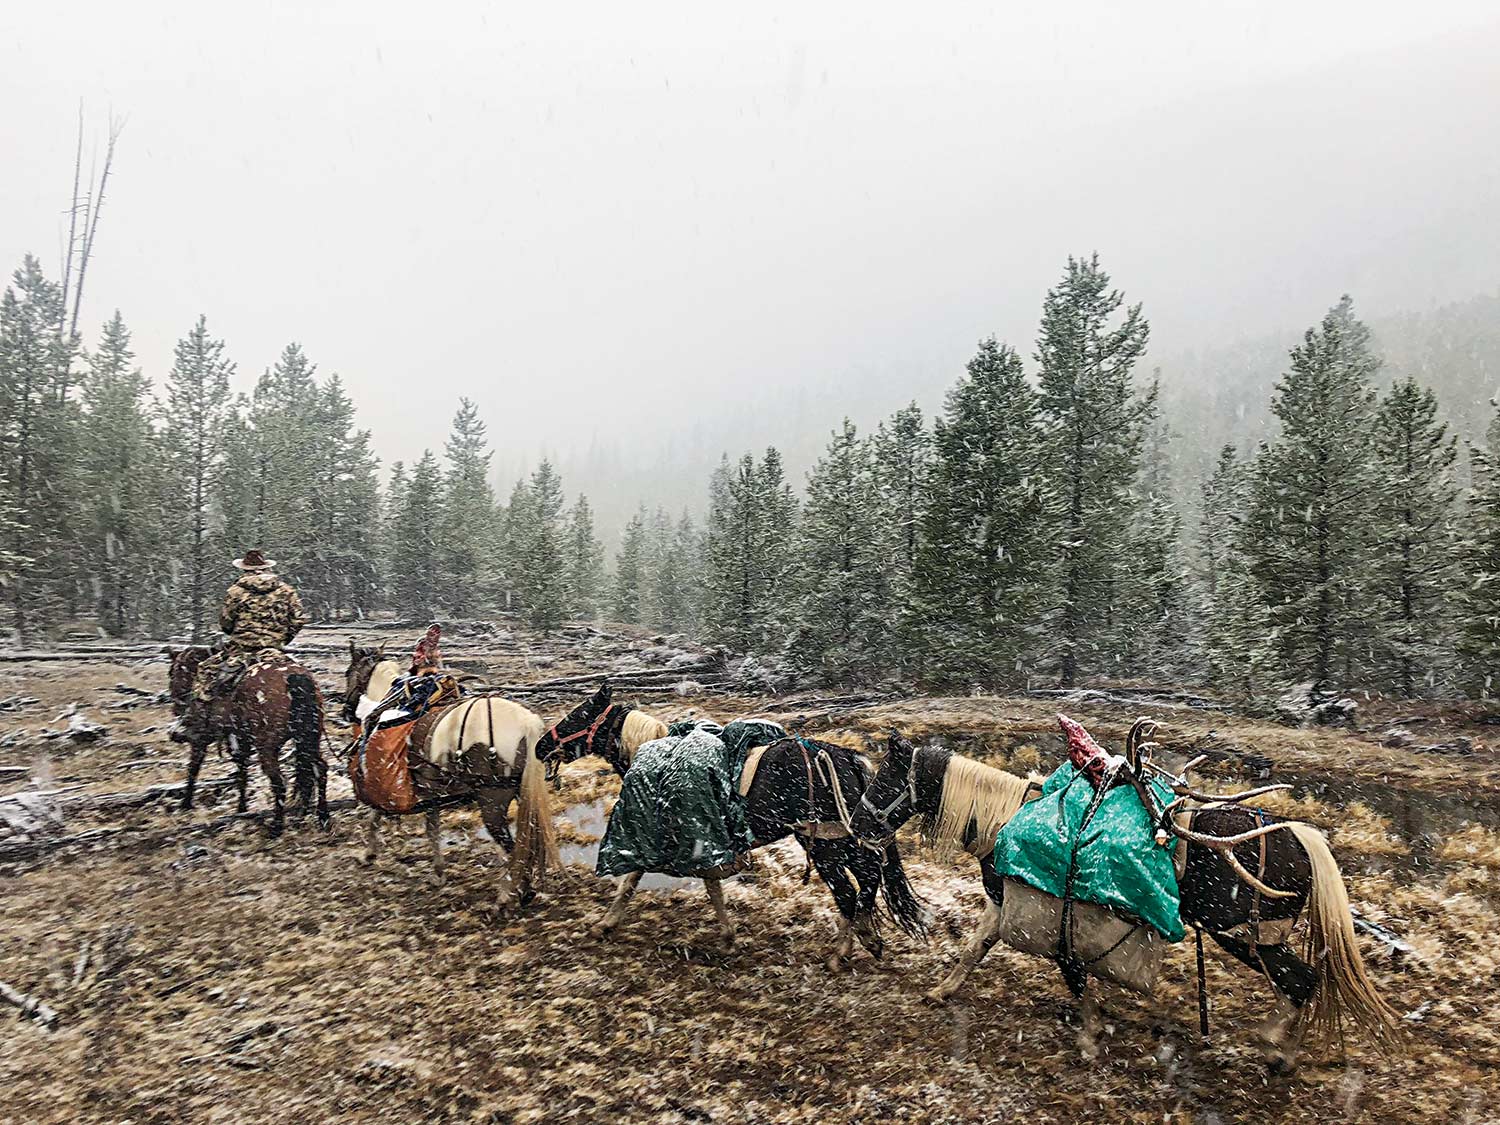 A caravan of hunters in the snow while hunting bull elk.